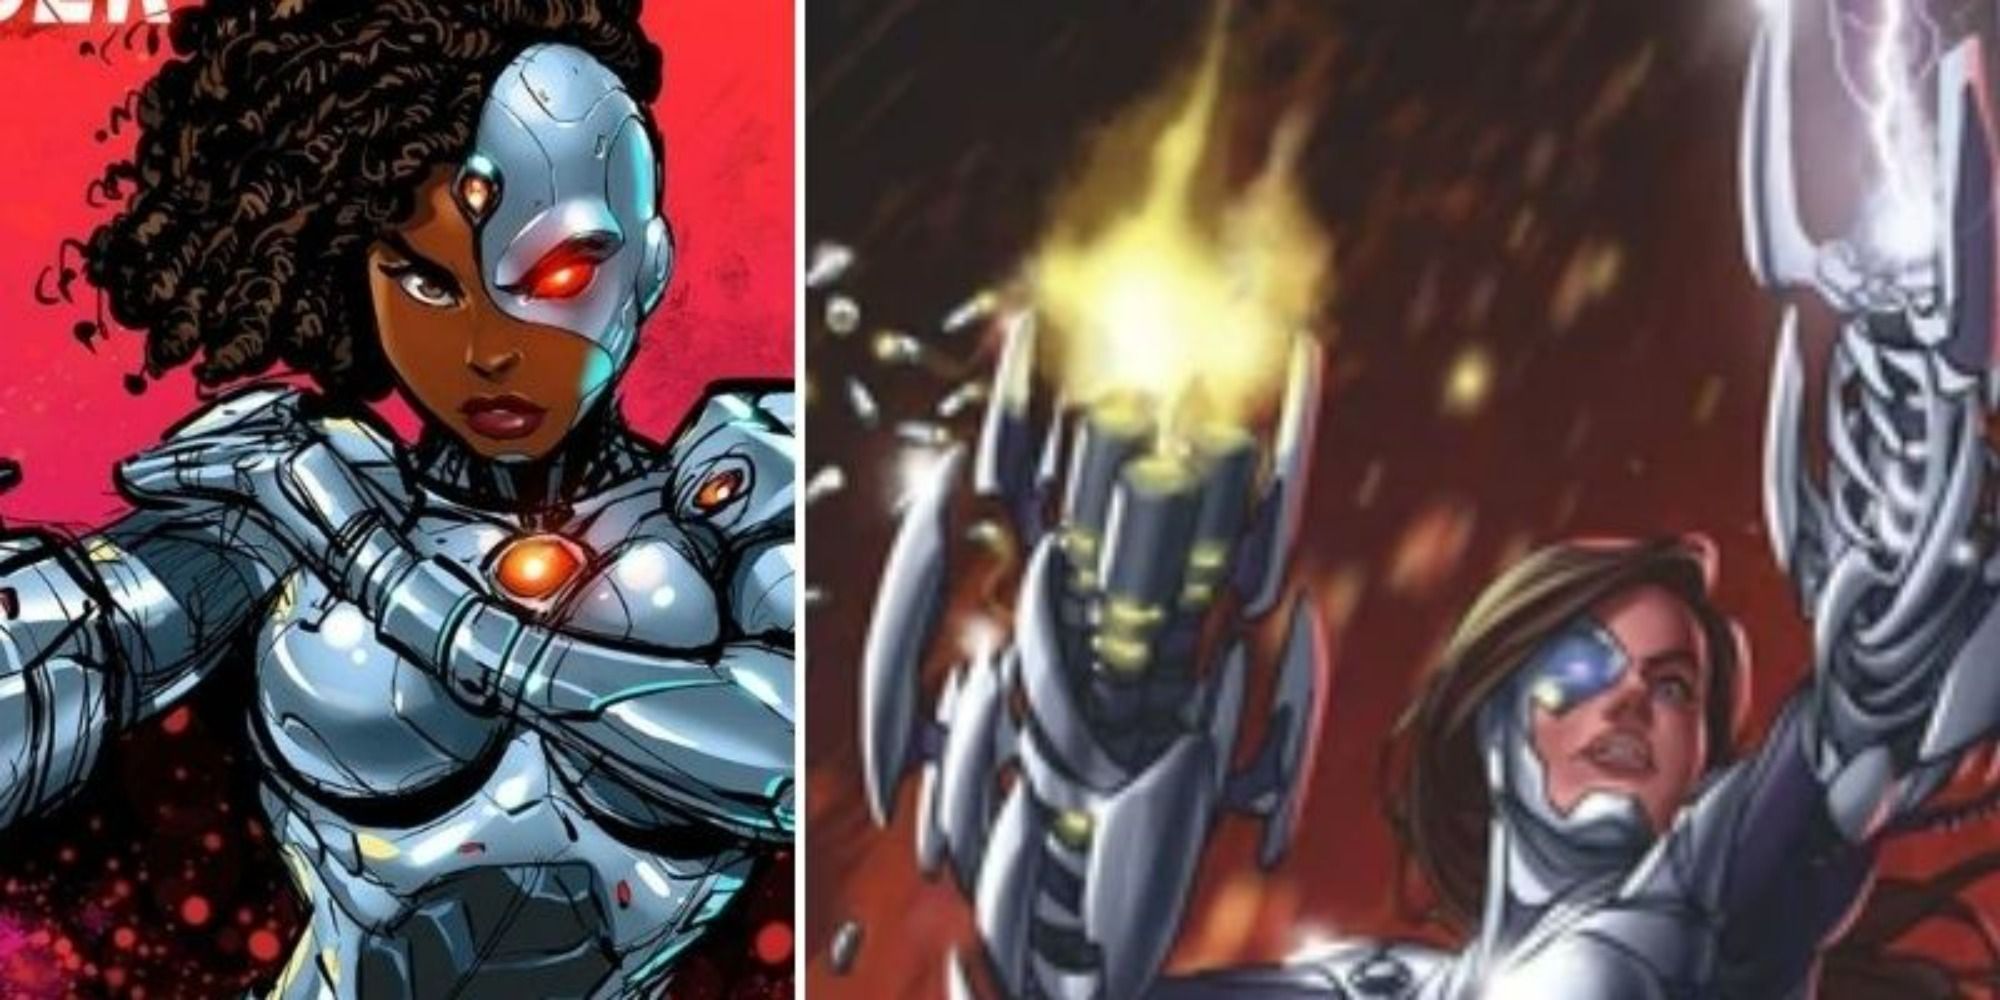 Cyborgirl split image showing villain posing and in battle